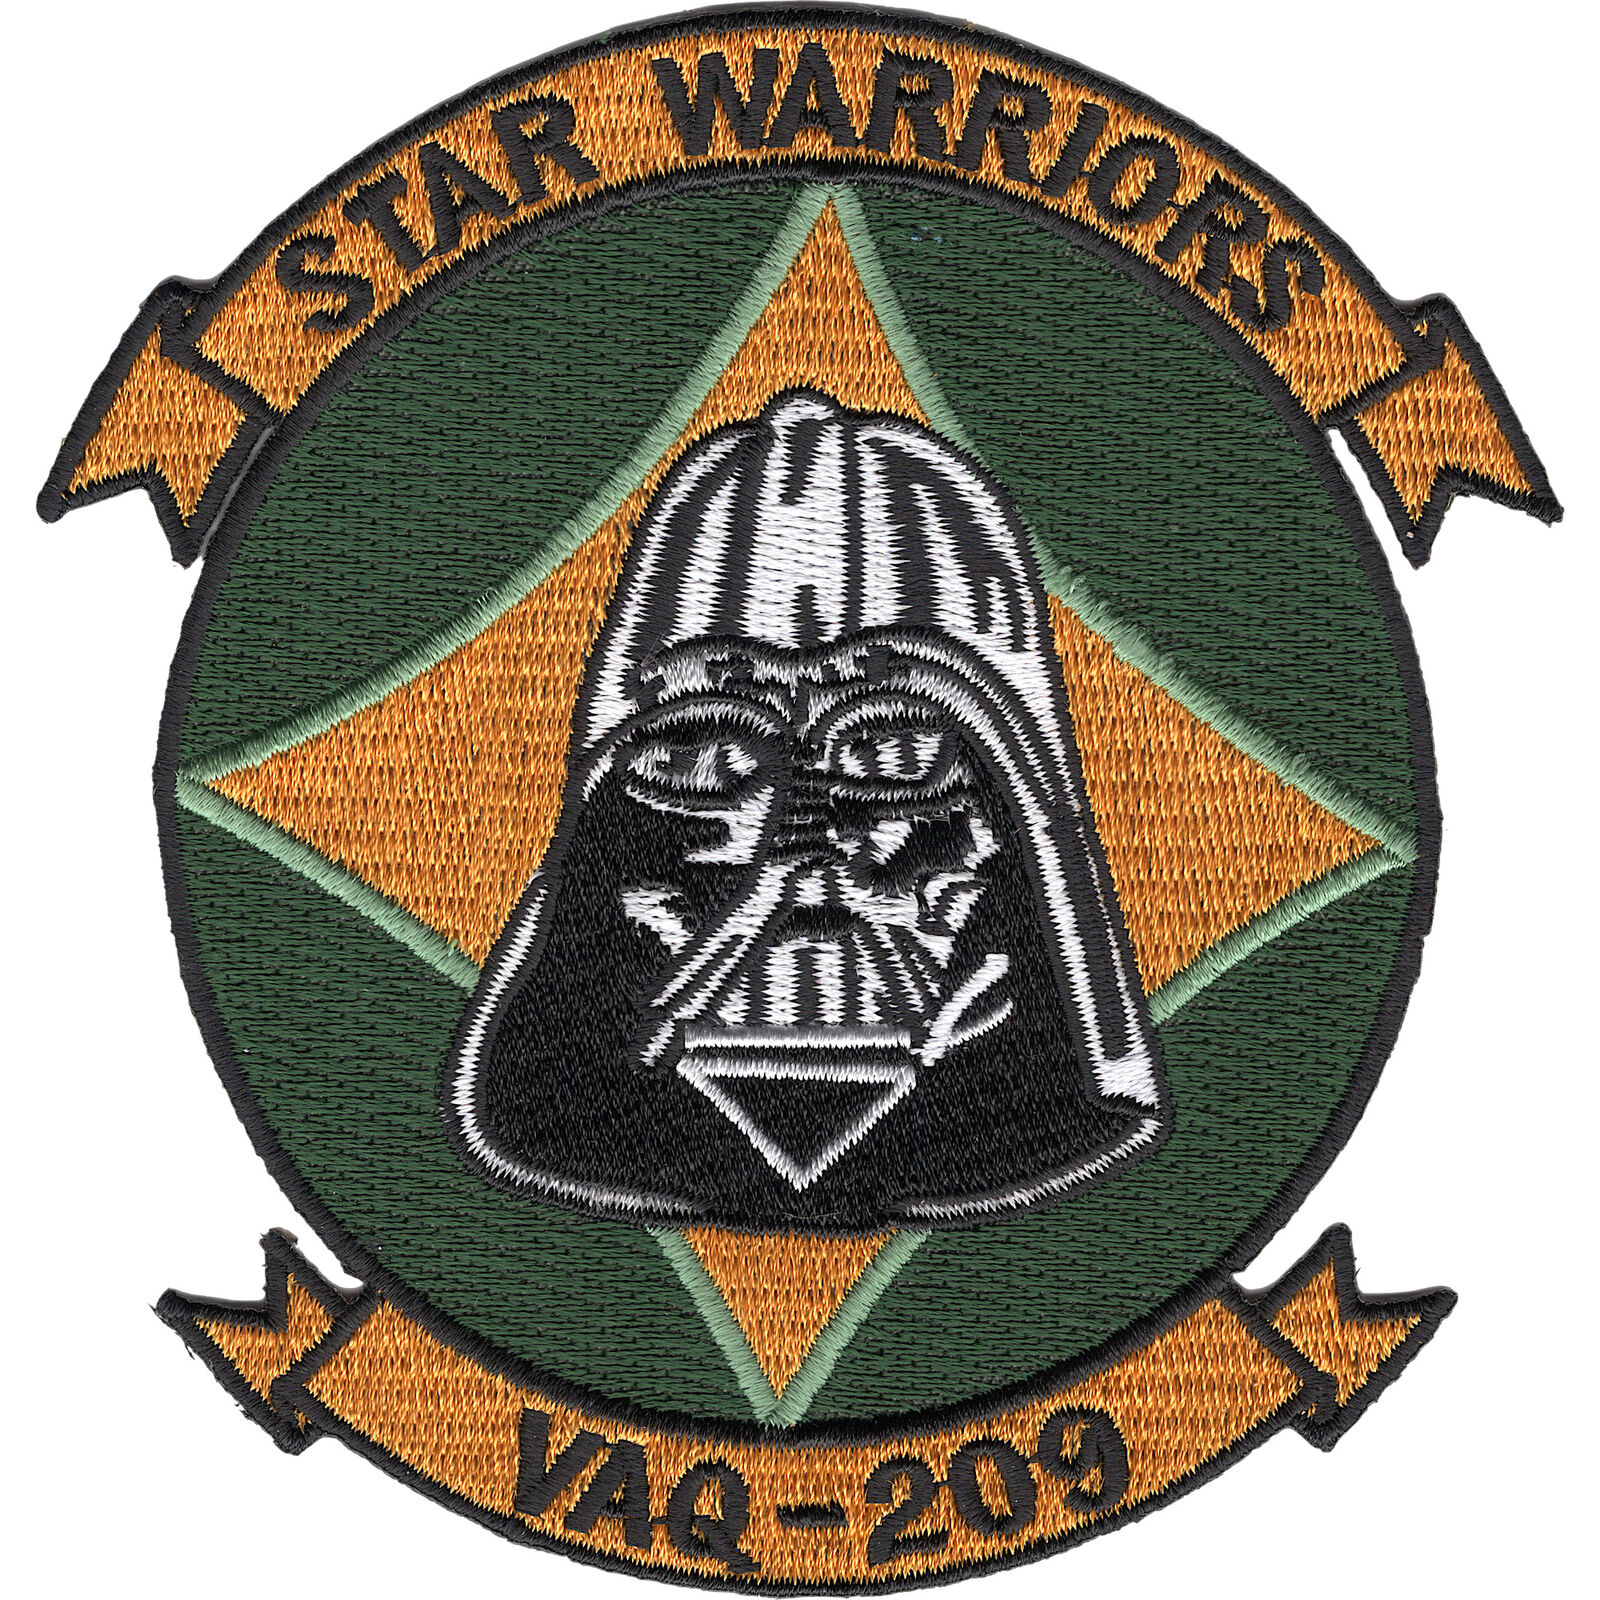 VAQ-209 Carrier Tactical Electronics Warfare Squadron Patch